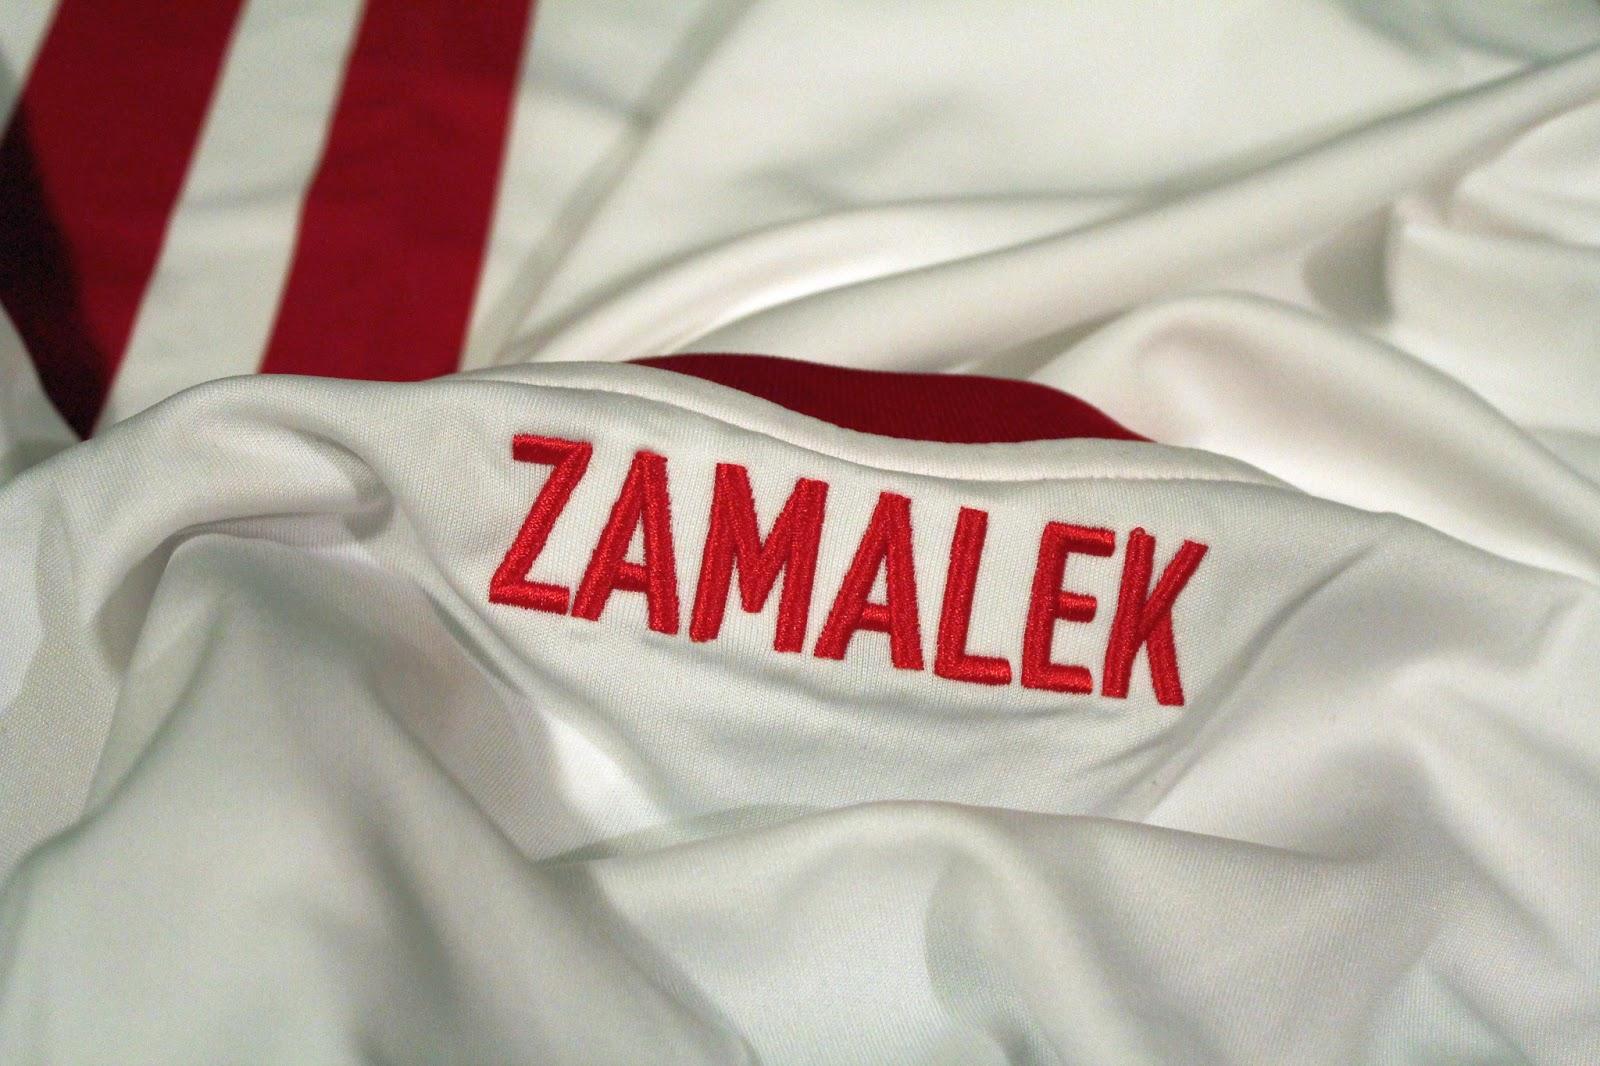 Solana's Football Shirt Collection: Zamalek SC 2011 12 Home Kit